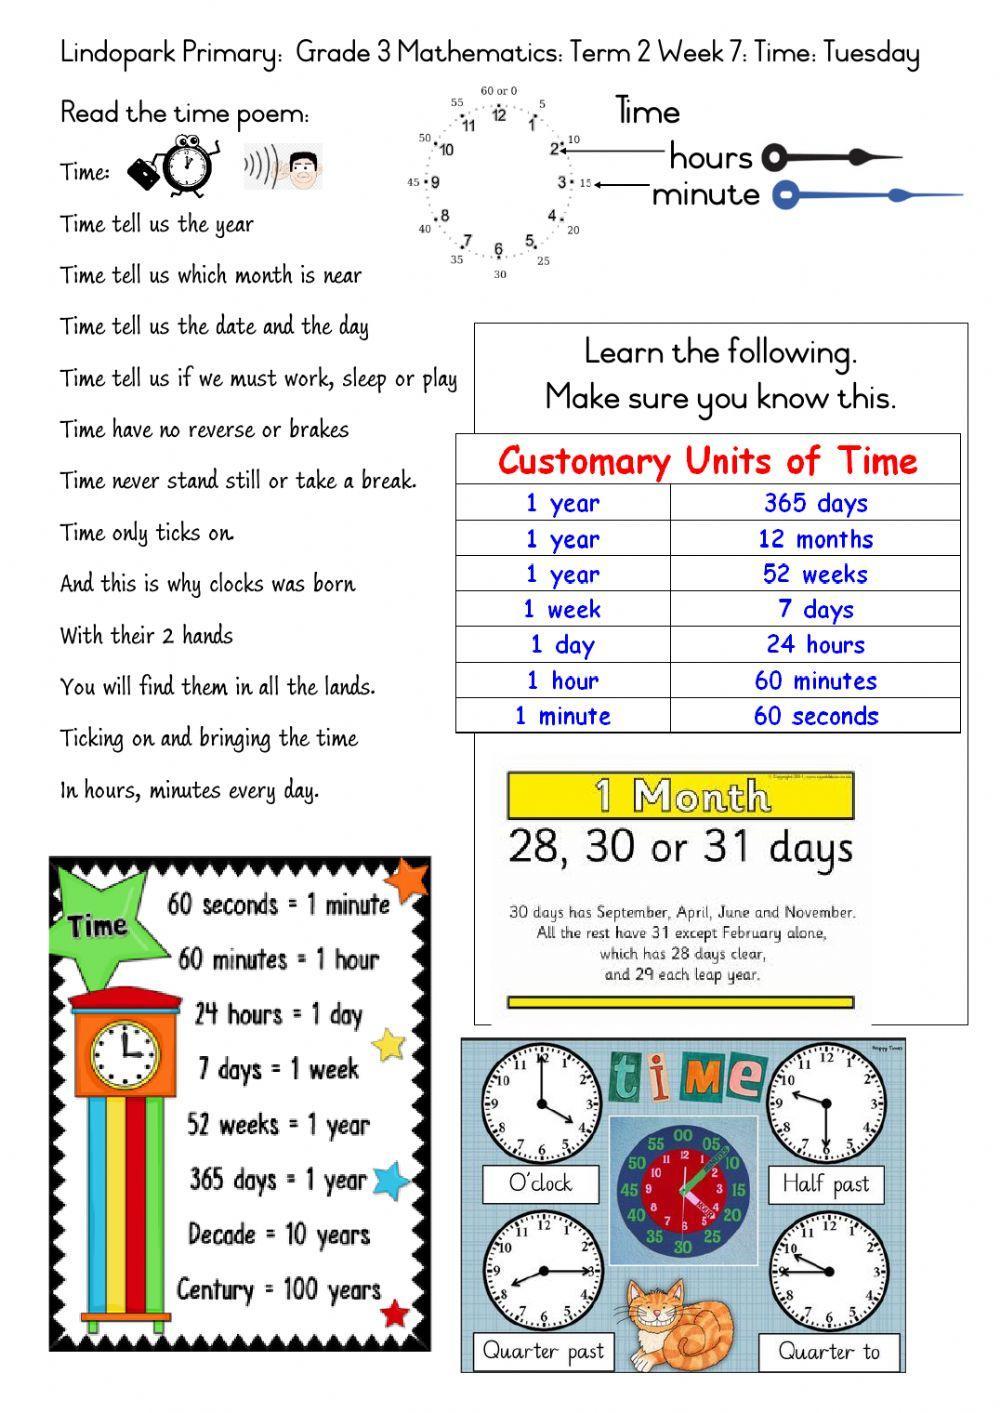 Grade 3 Term 2 Week 7 Mathamtics-Time: Tuesday